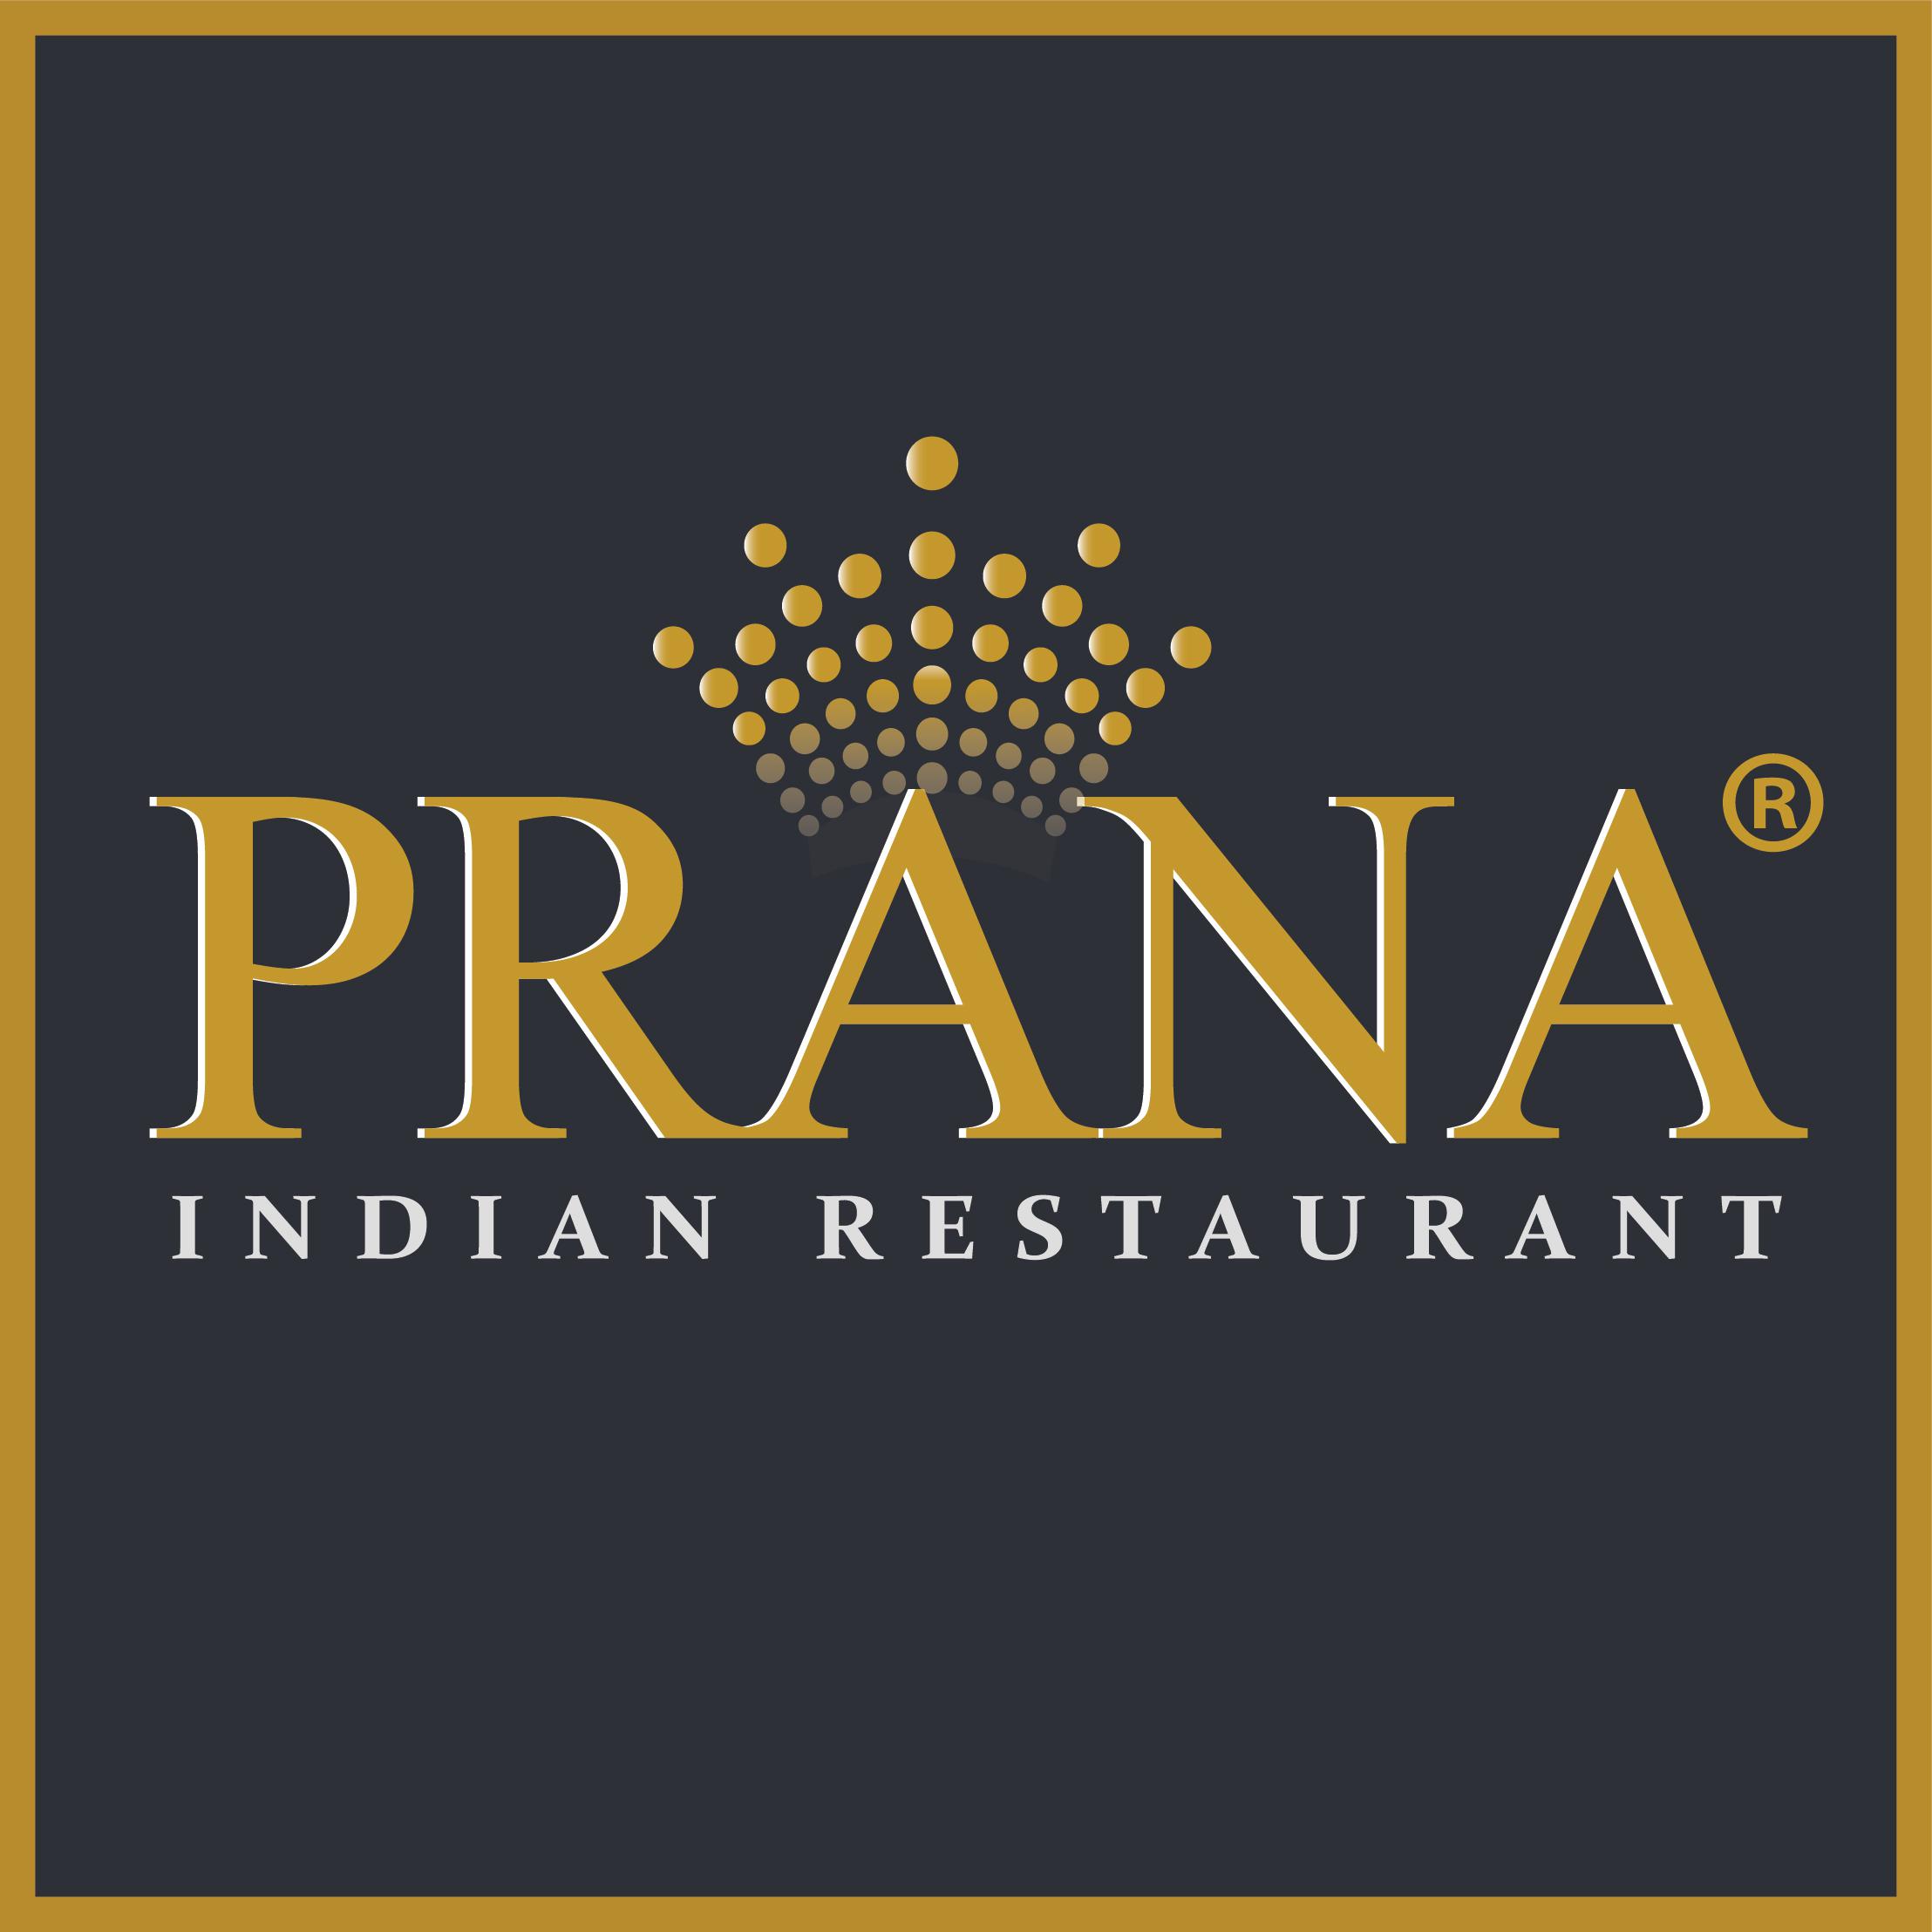 Prana Indian Restaurant logo